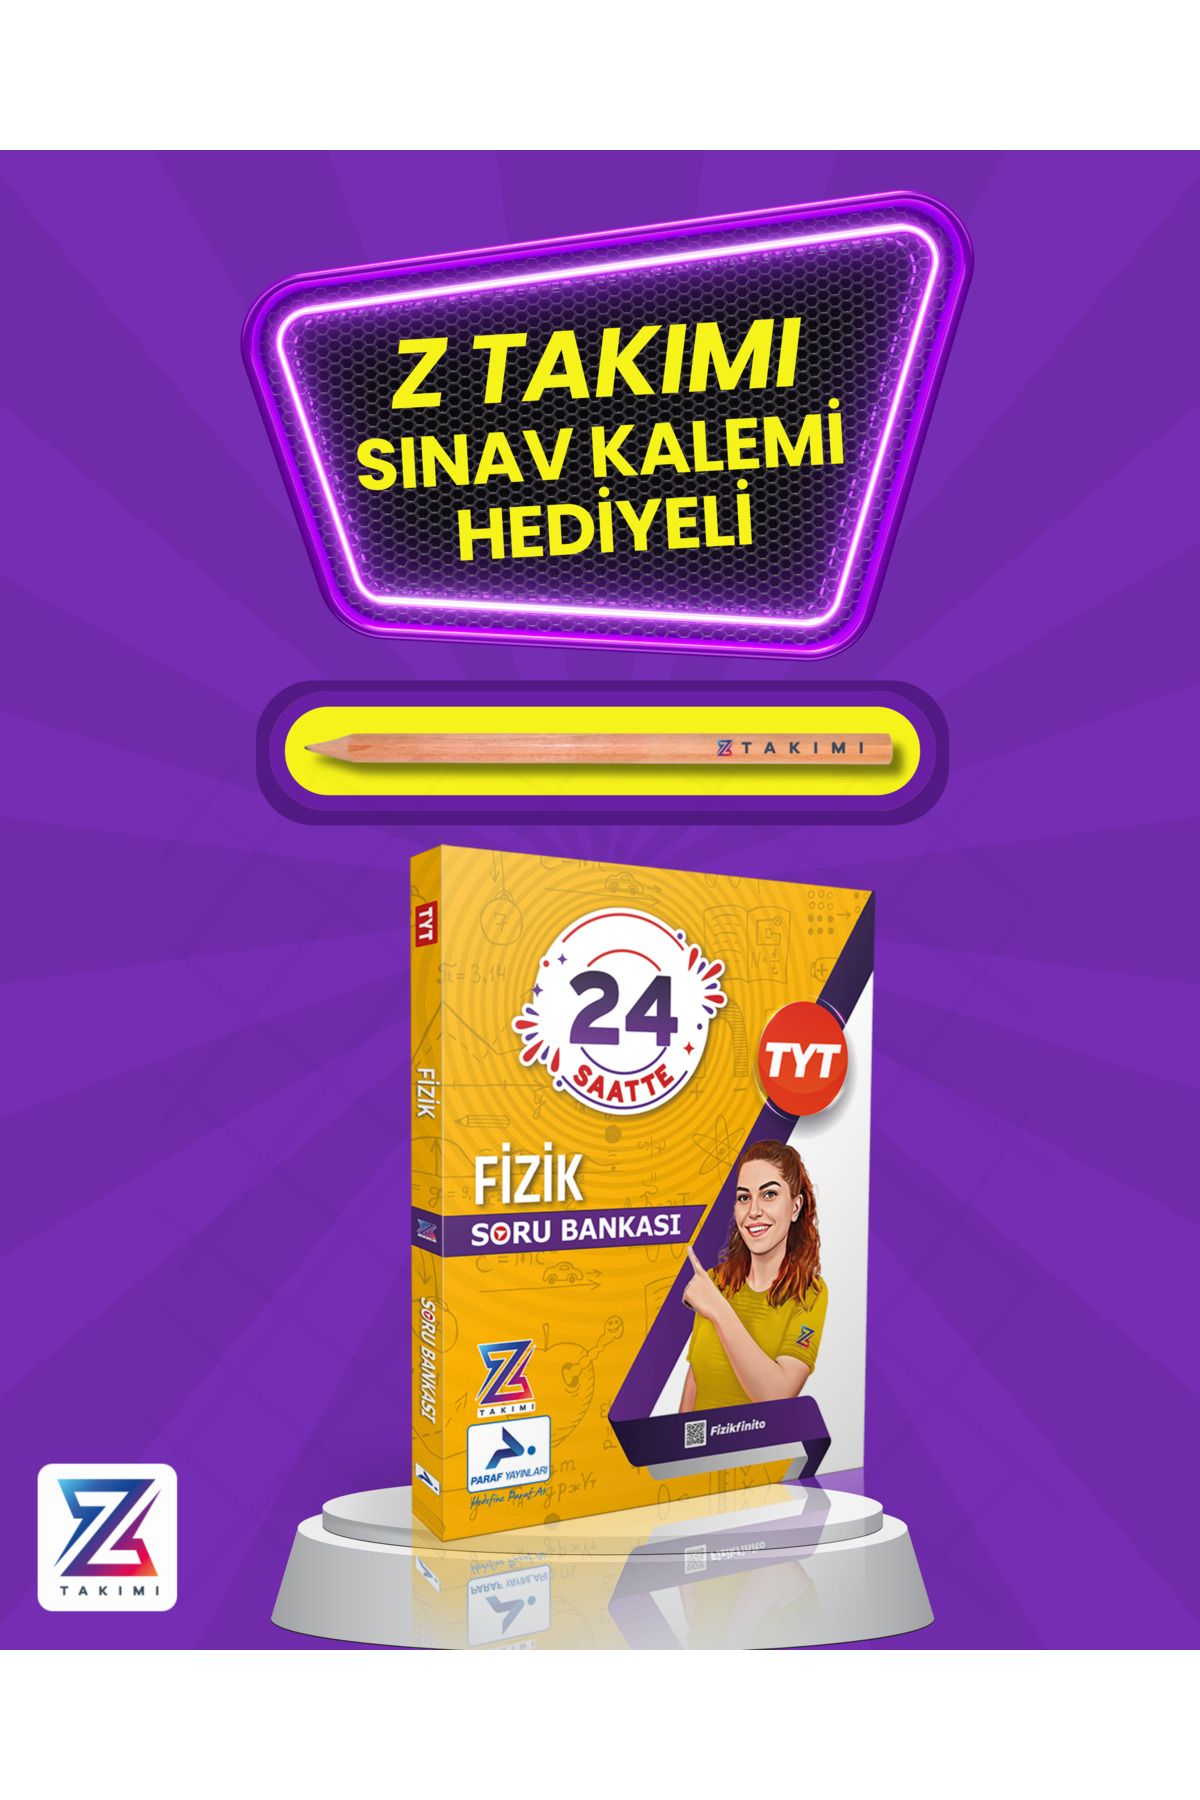 Paraf Yayınları Fizikfinito PARAF Z TAKIMI 24 SAATTE FİZİK SORU BANKASI